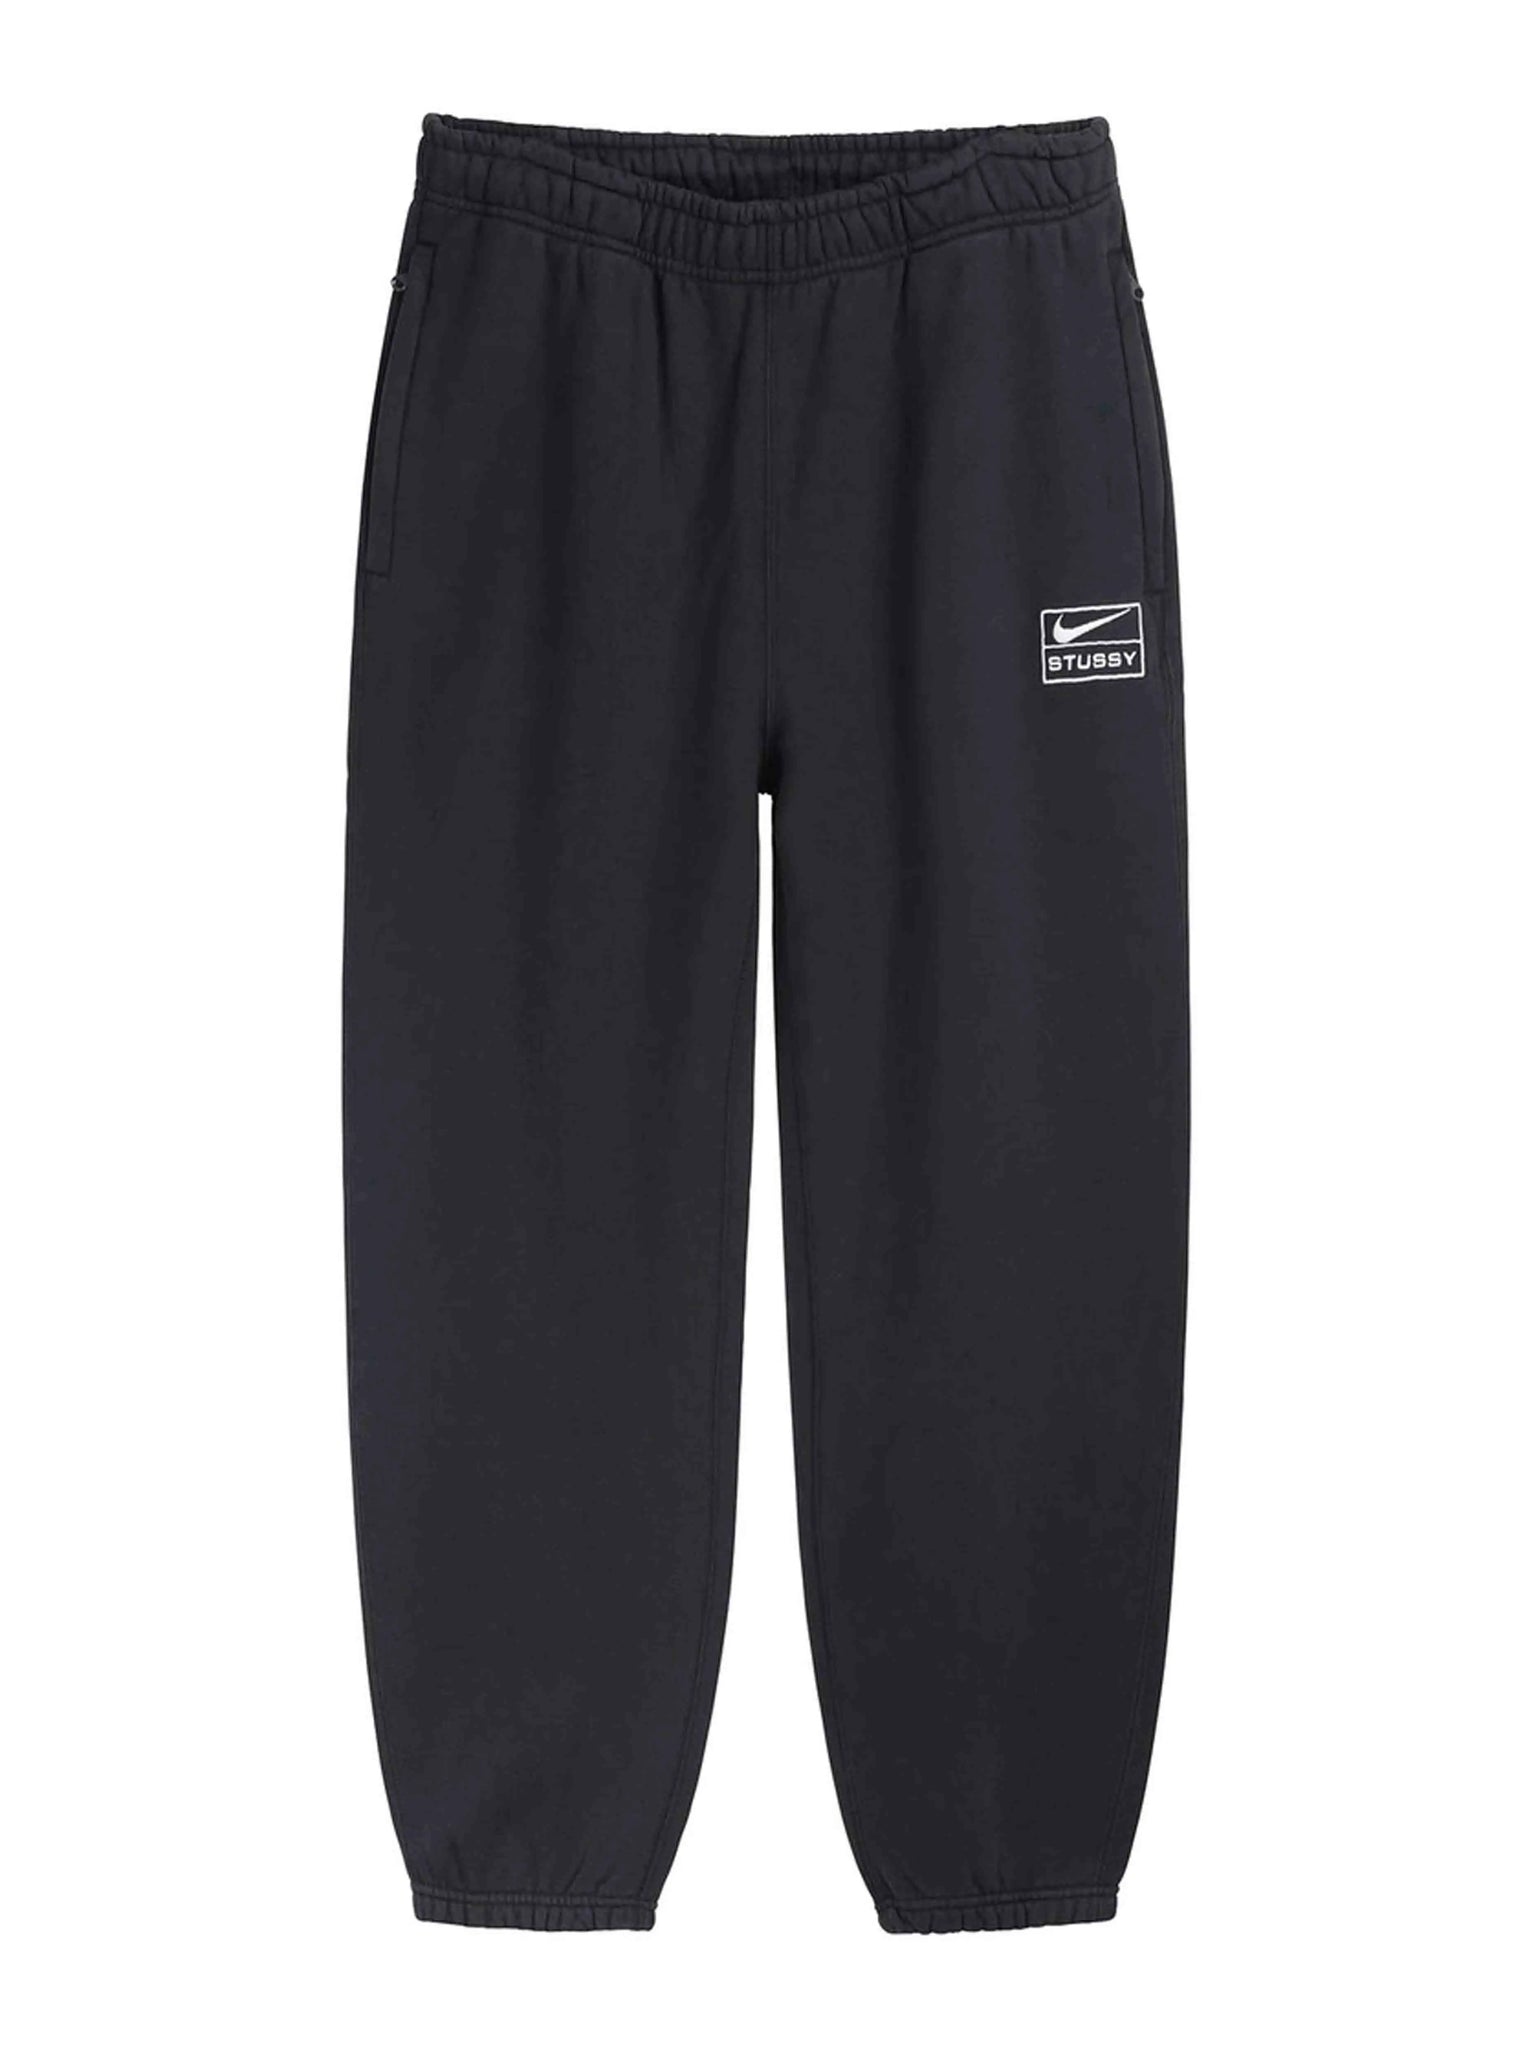 Nike x Stussy Sweatpants Black [SS22] Prior